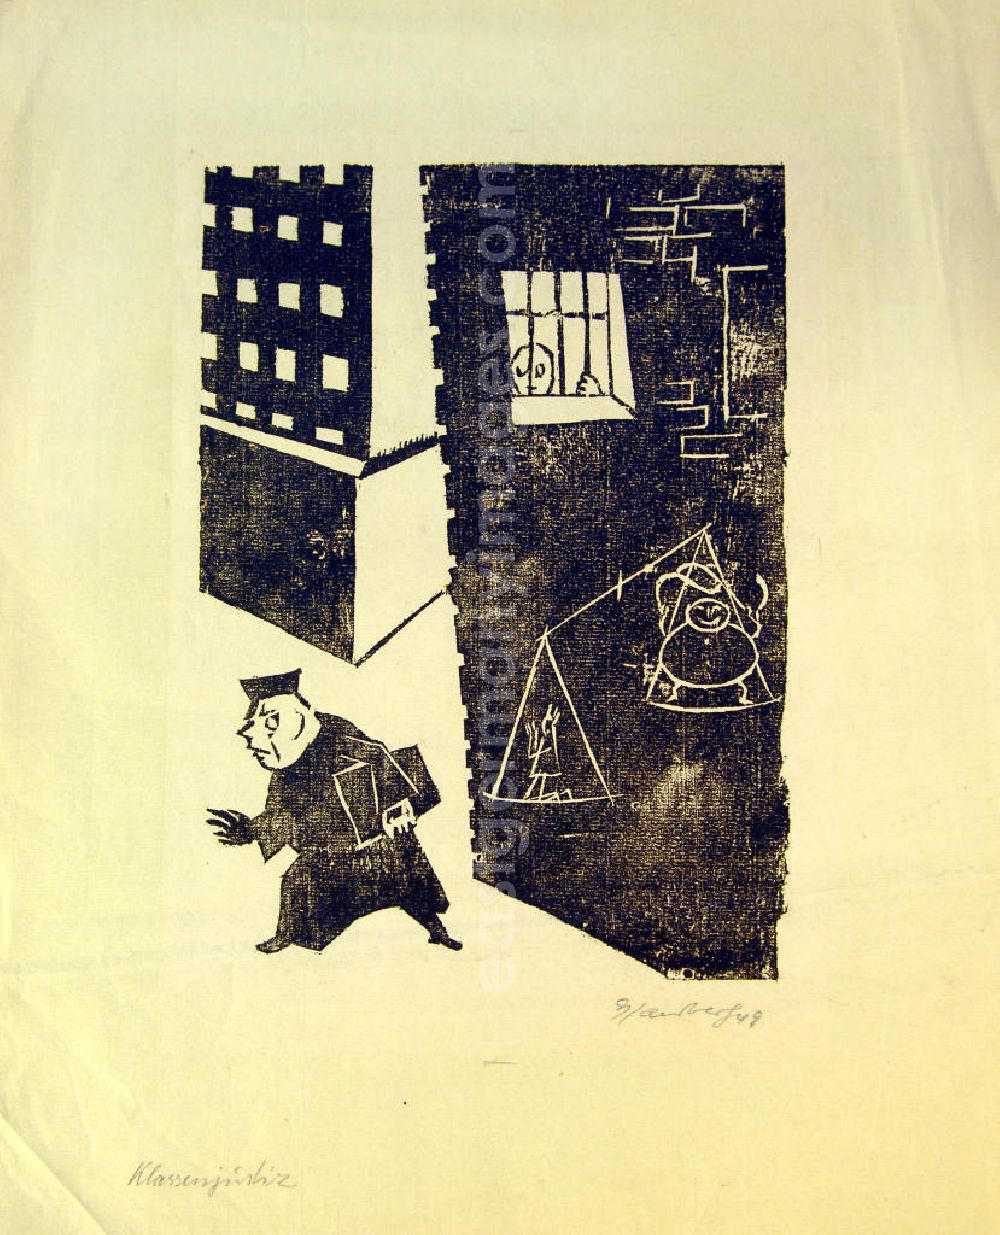 GDR picture archive: Berlin - Grafik von Herbert Sandberg Klassenjustiz aus dem Jahr 1949, 28,5x2